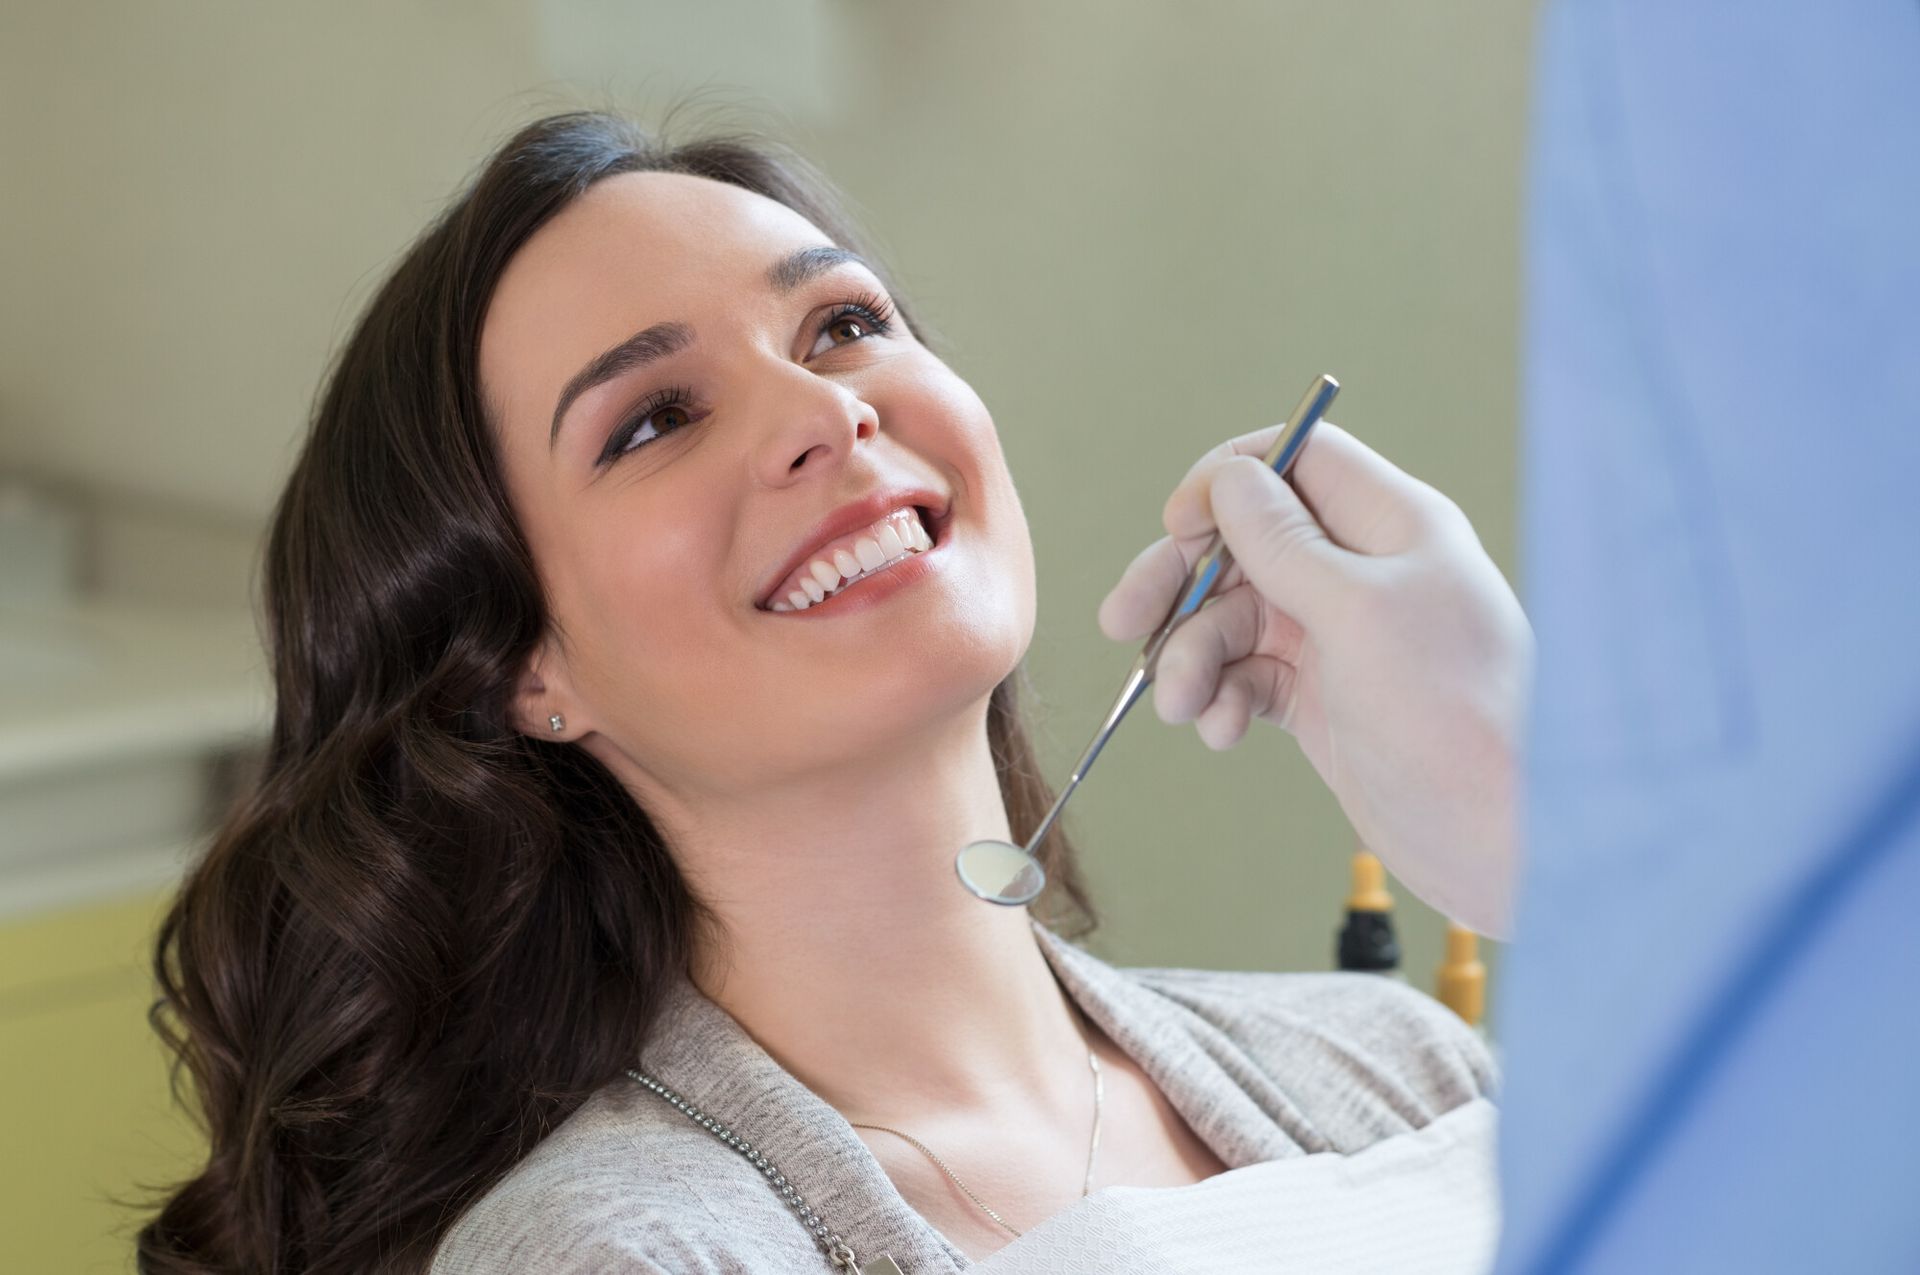 Woman getting dental exam